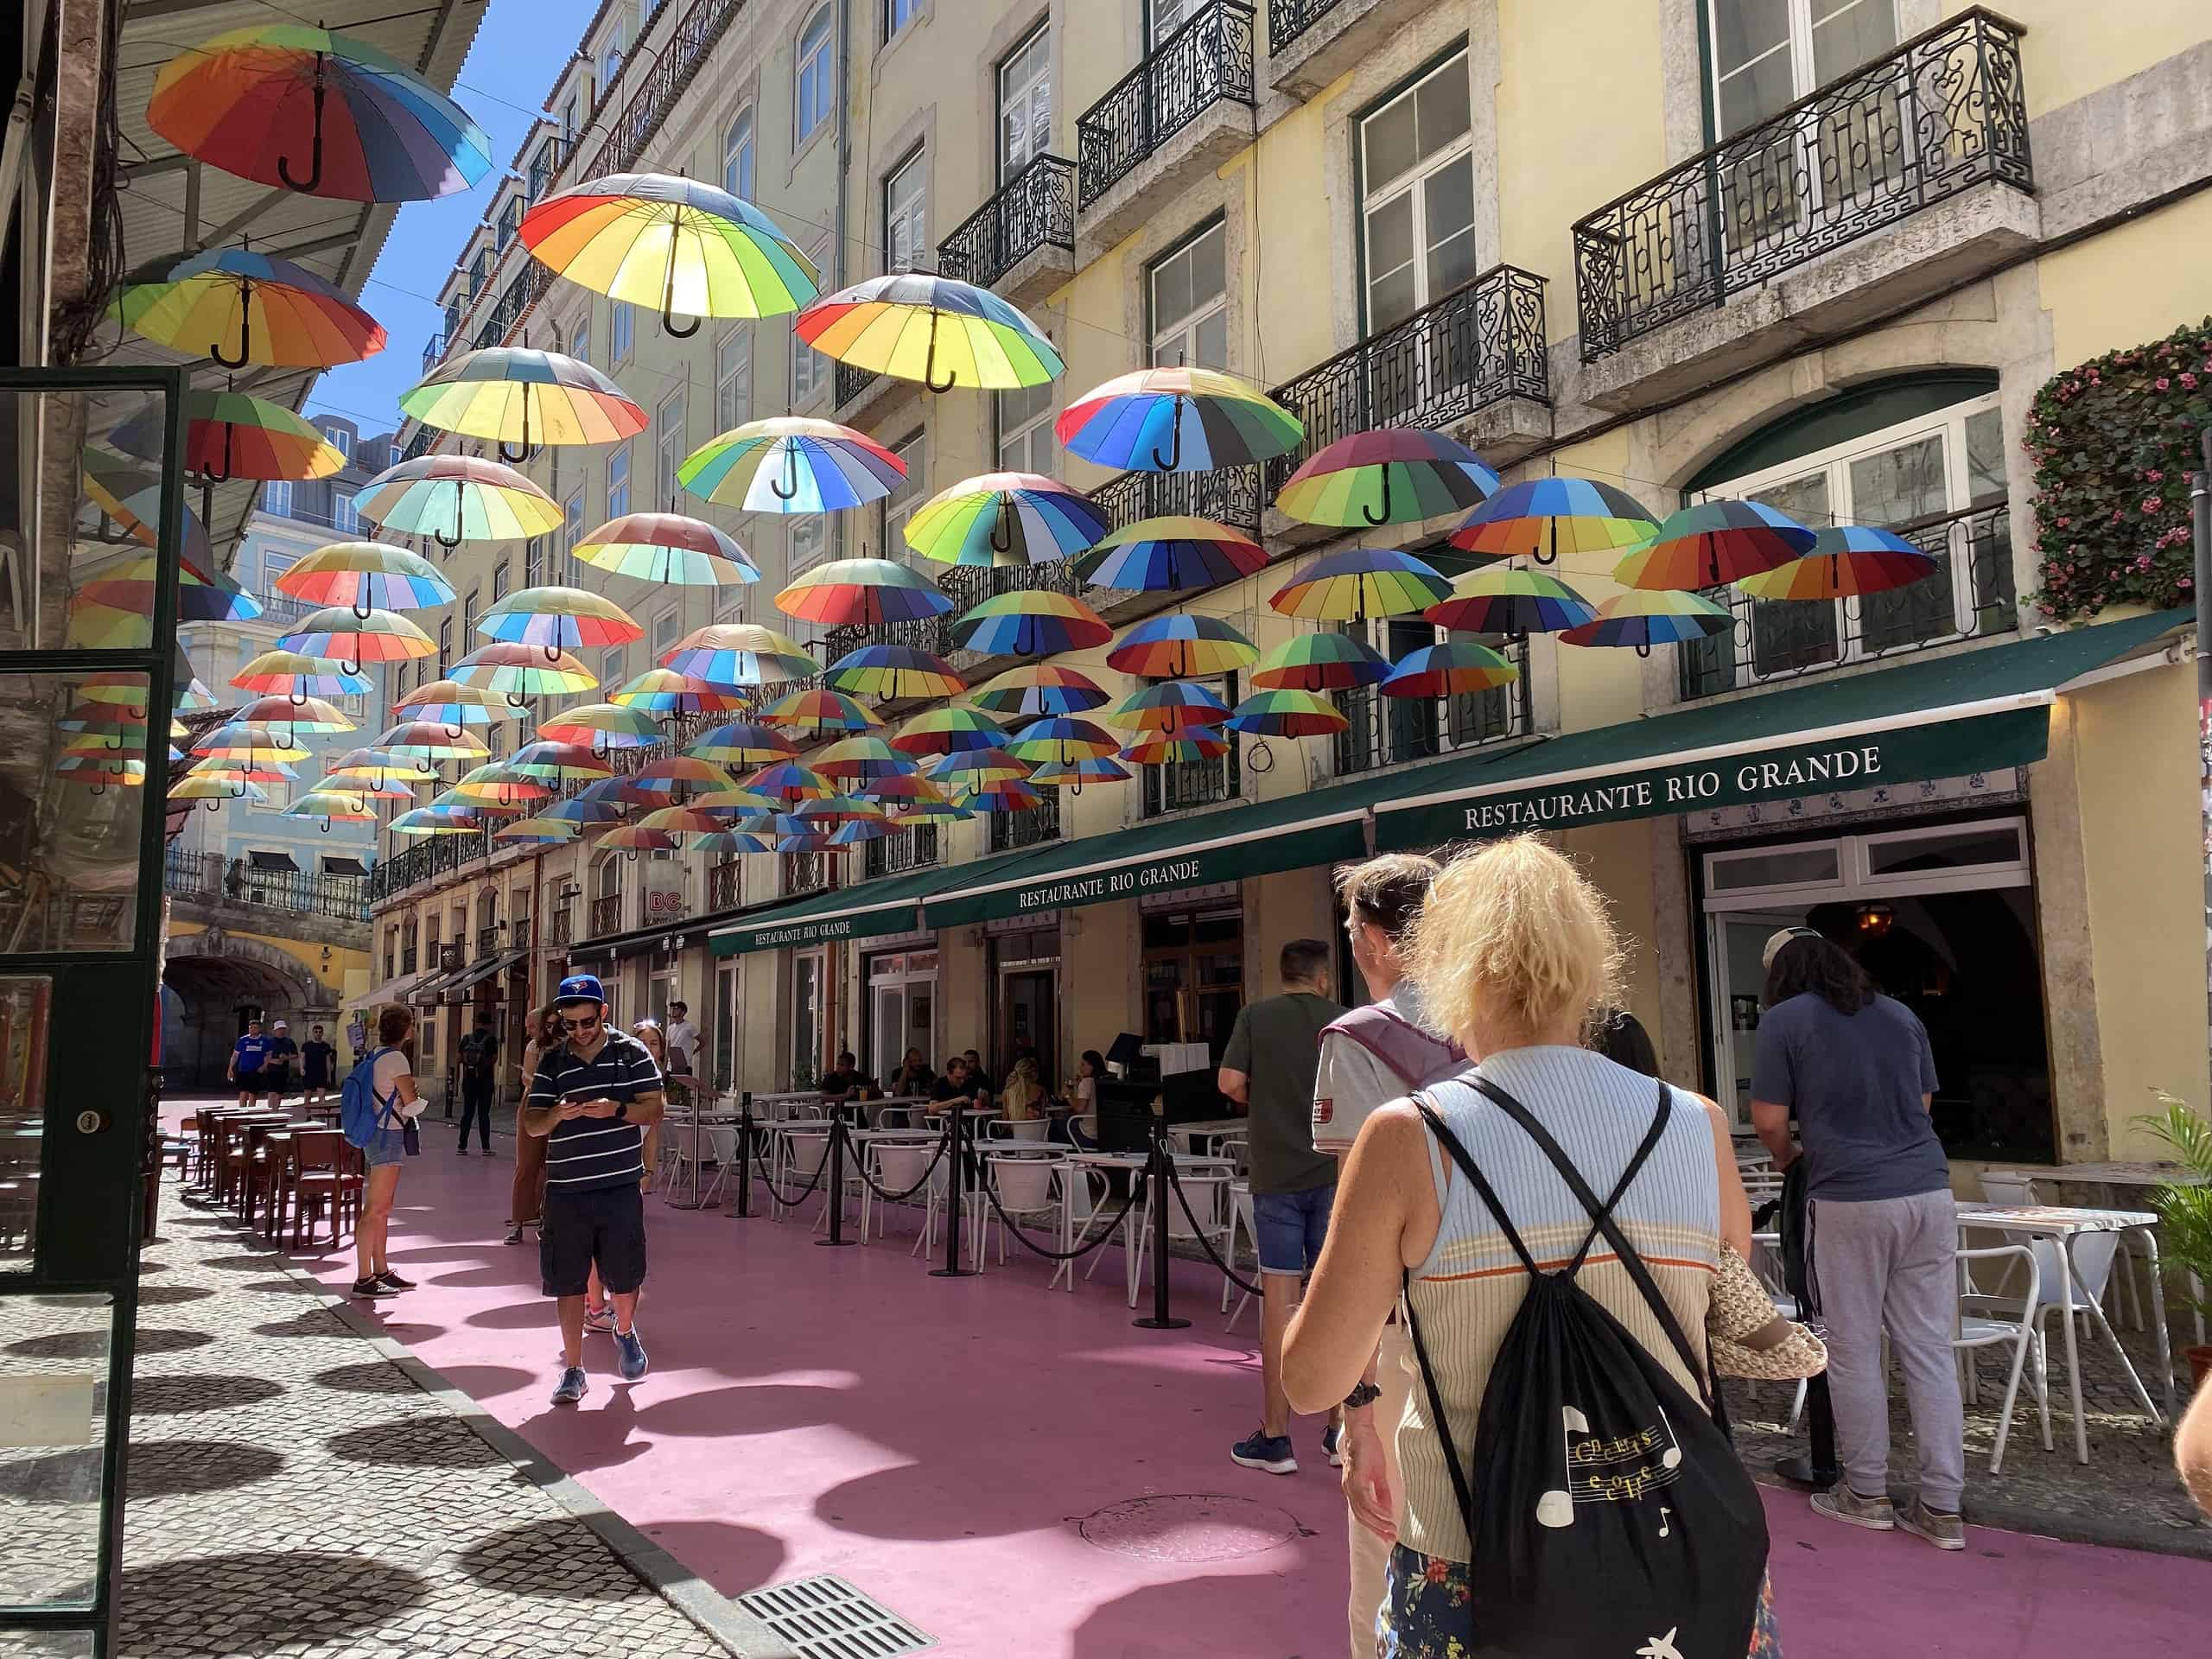 pink street lisbon portugal